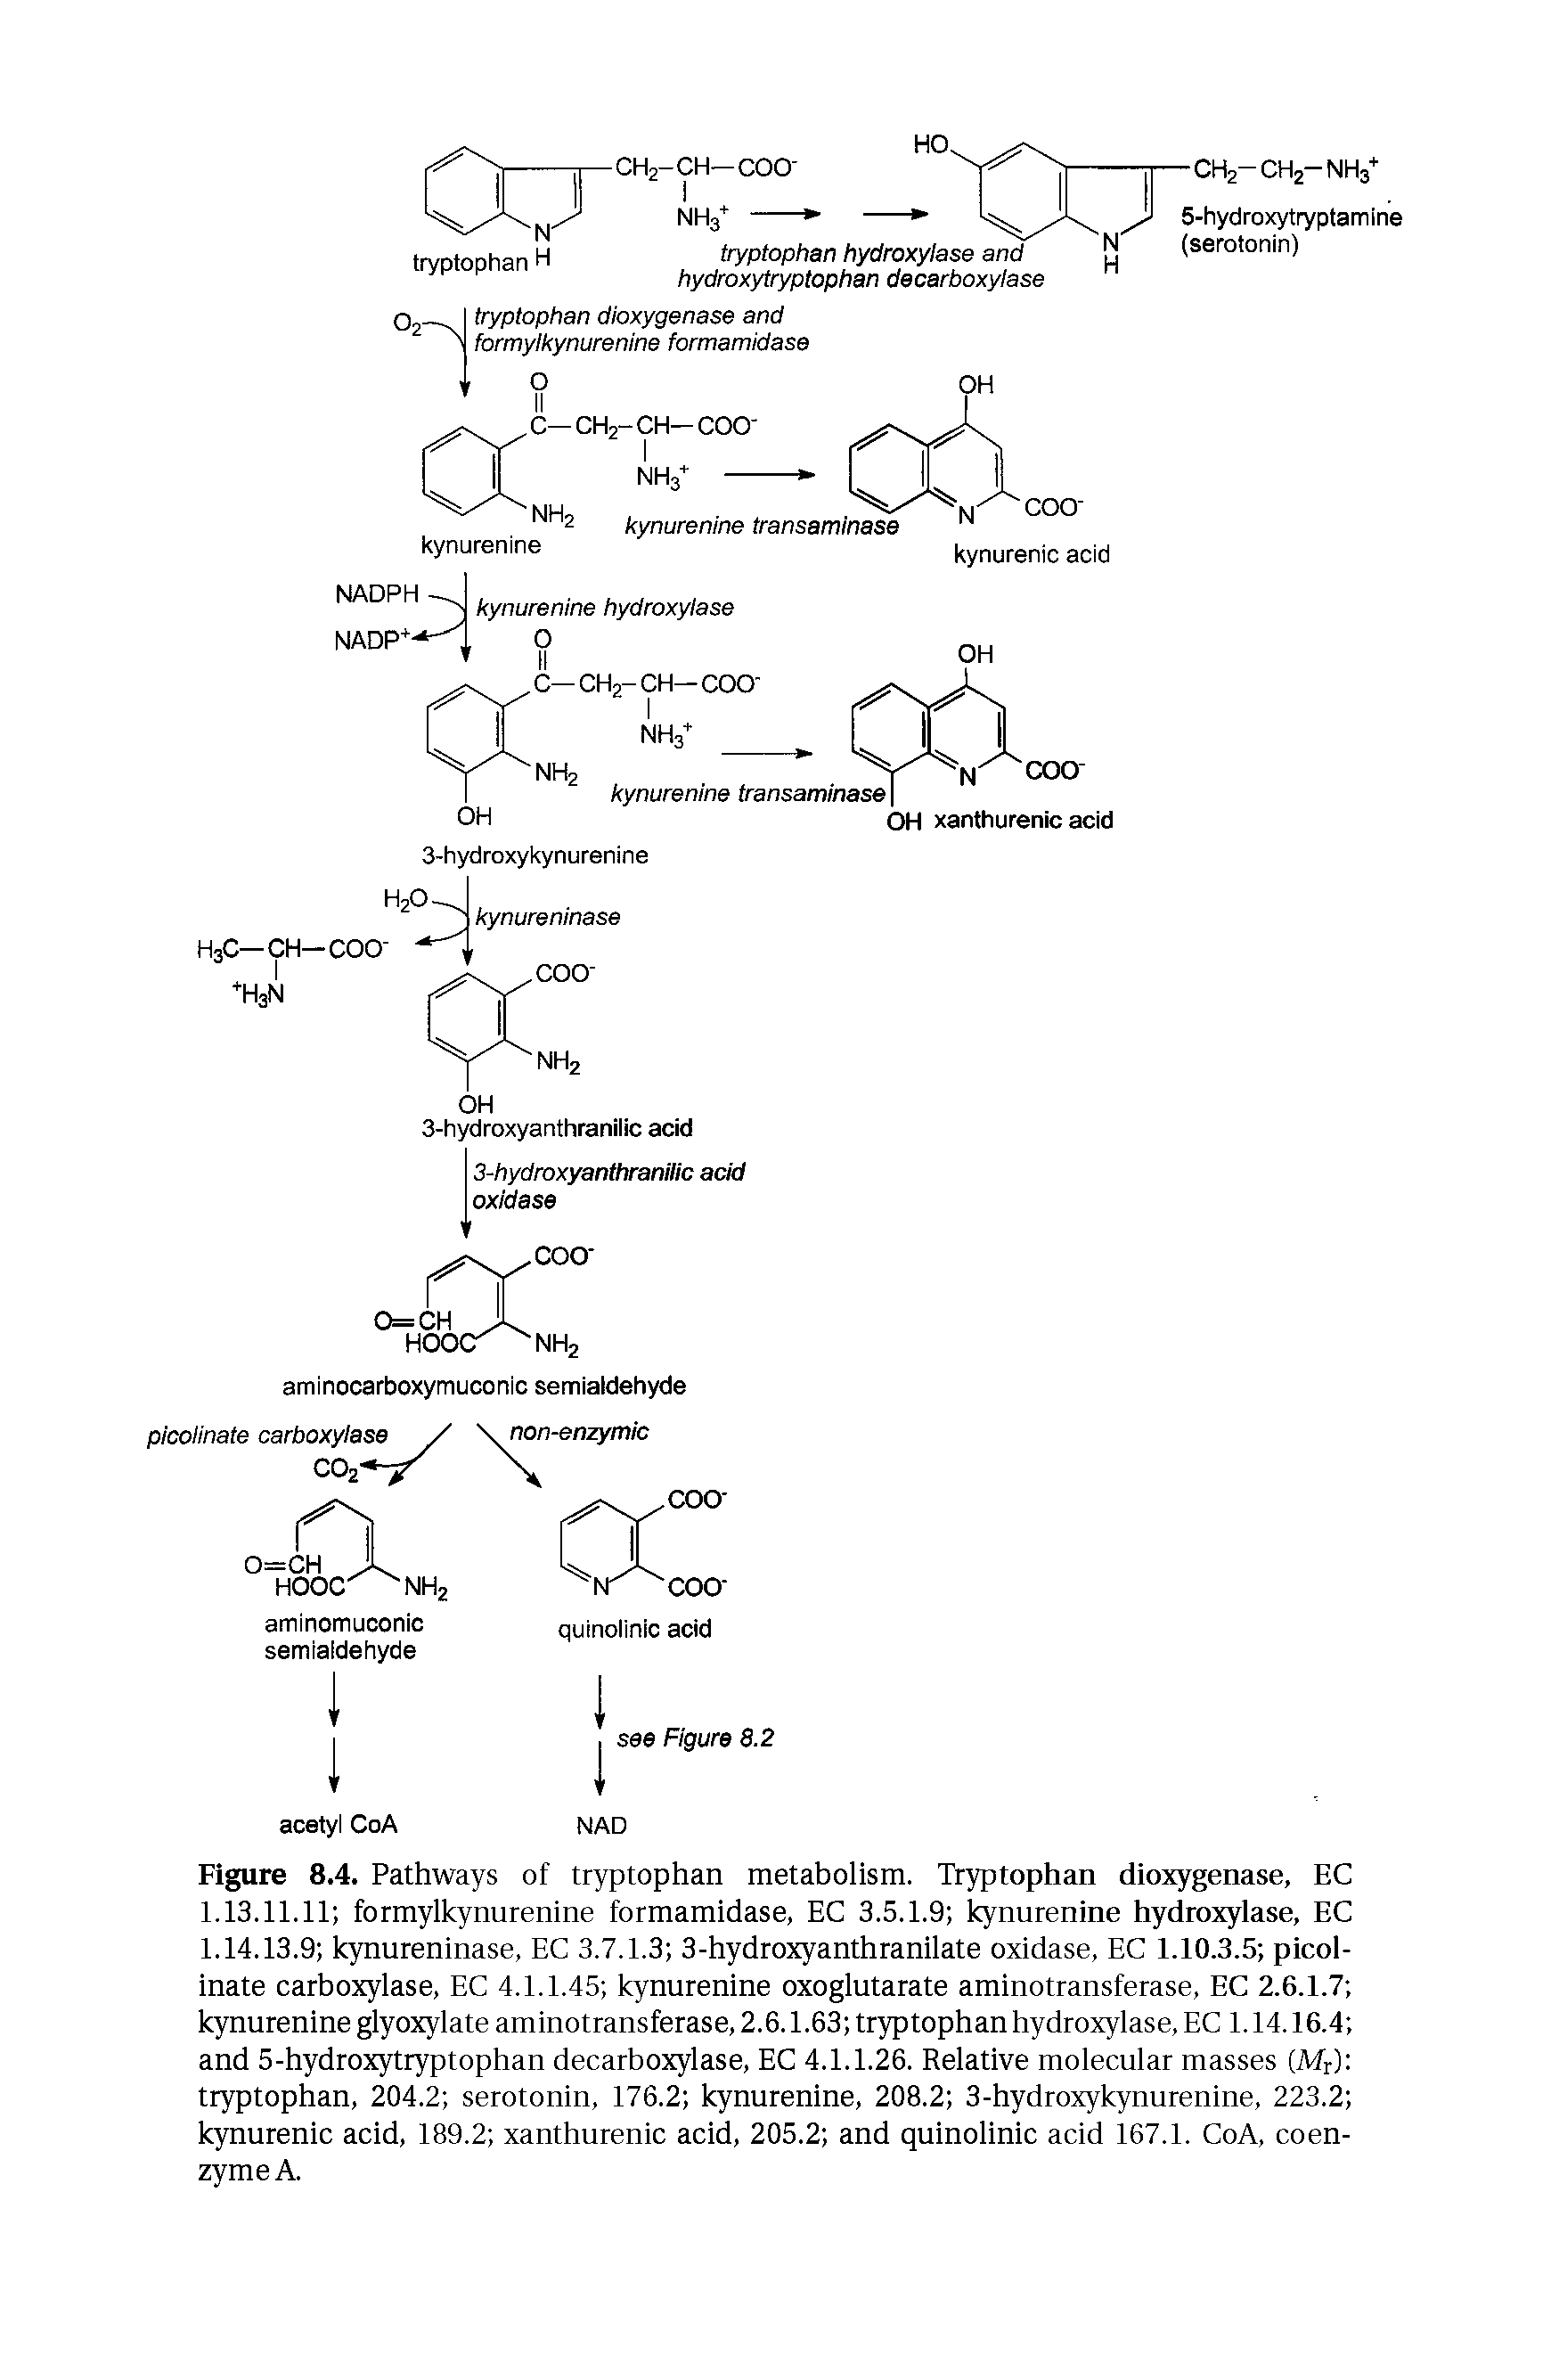 Figure 8.4. Pathways of tryptophan metaholism. Tryptophan dioxygenase, EC 1.13.11.11 formylkynurenine formamidase, EC 3.5.1.9 kynurenine hydroxylase, EC 1.14.13.9 kynureninase, EC 3.7.1.3 3-hydroxyanthranilate oxidase, EC 1.10.3.5 picolinate carboxylase, EC 4.1.1.45 kynurenine oxoglutarate aminotransferase, EC 2.6.1.7 kynurenine glyoxylate aminotransferase, 2.6.1.63 tryptophan hydroxylase, EC 1.14.16.4 and 5-hydroxytryptophan decarboxylase, EC 4.1.1.26. Relative molecular masses (Mr) tryptophan, 204.2 serotonin, 176.2 kynurenine, 208.2 3-hydroxykynurenine, 223.2 kynurenic acid, 189.2 xanthurenic acid, 205.2 and quinolinic acid 167.1. CoA, coenzyme A.